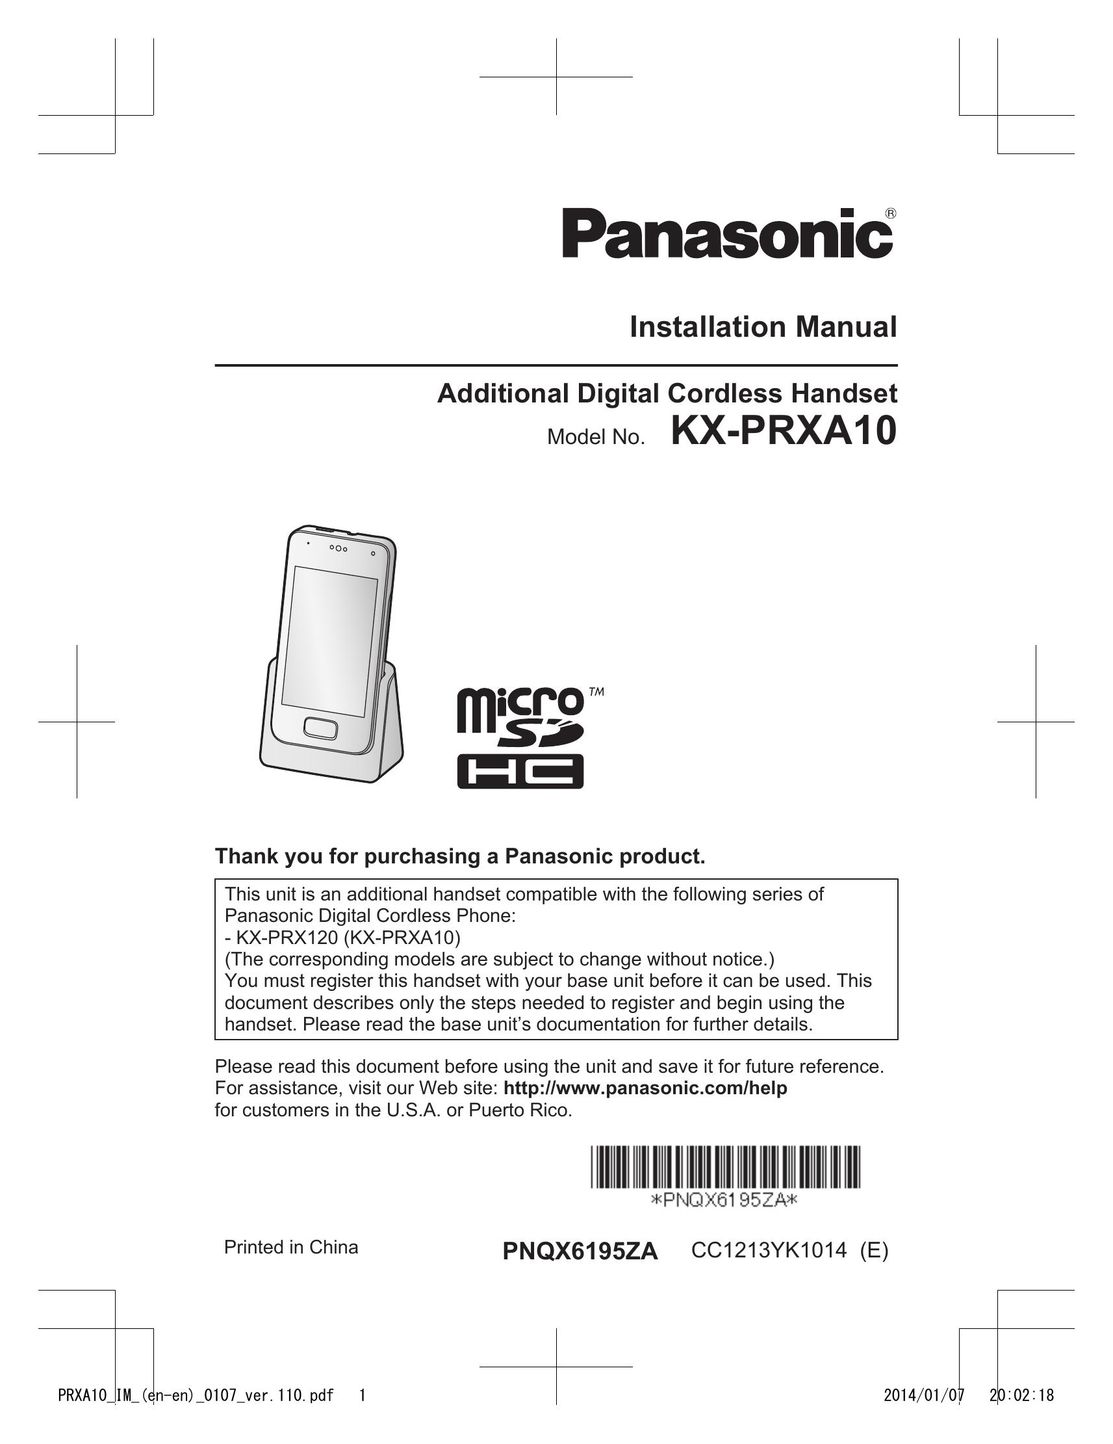 Panasonic KX-PRXA10 Cordless Telephone User Manual (Page 1)